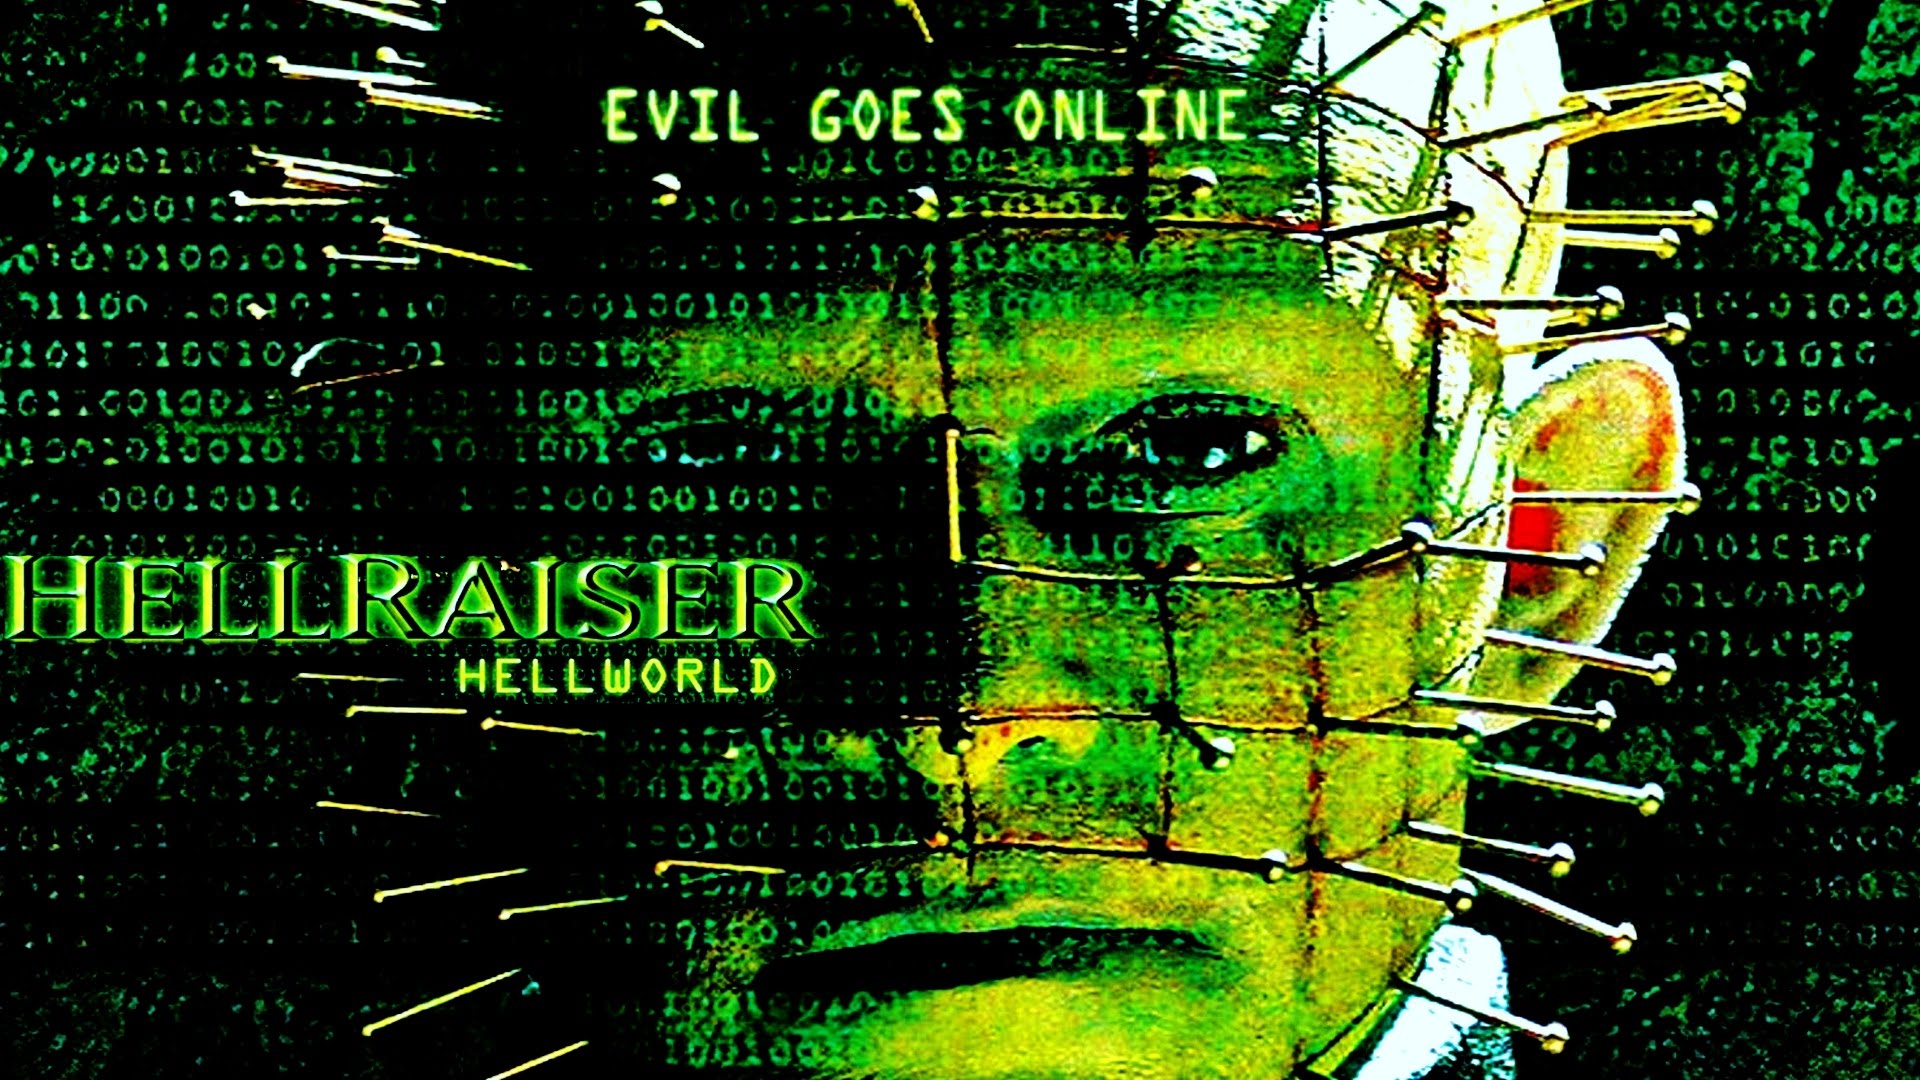 [30 Days of Halloween] Hellraiser: Hellworld (2005) Review